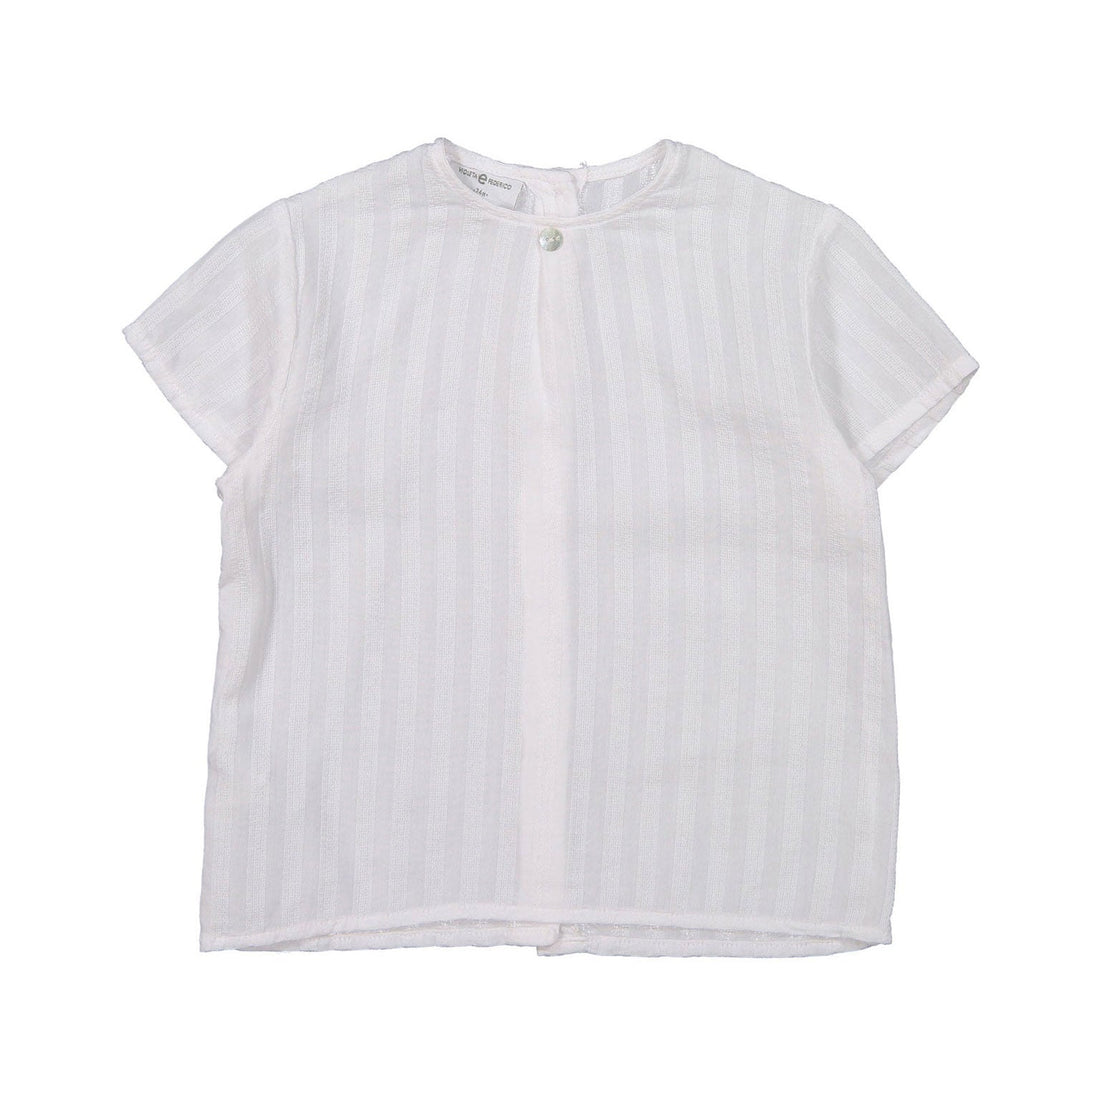 Violeta shirts Violeta White Cotton Nak Baby Shirt